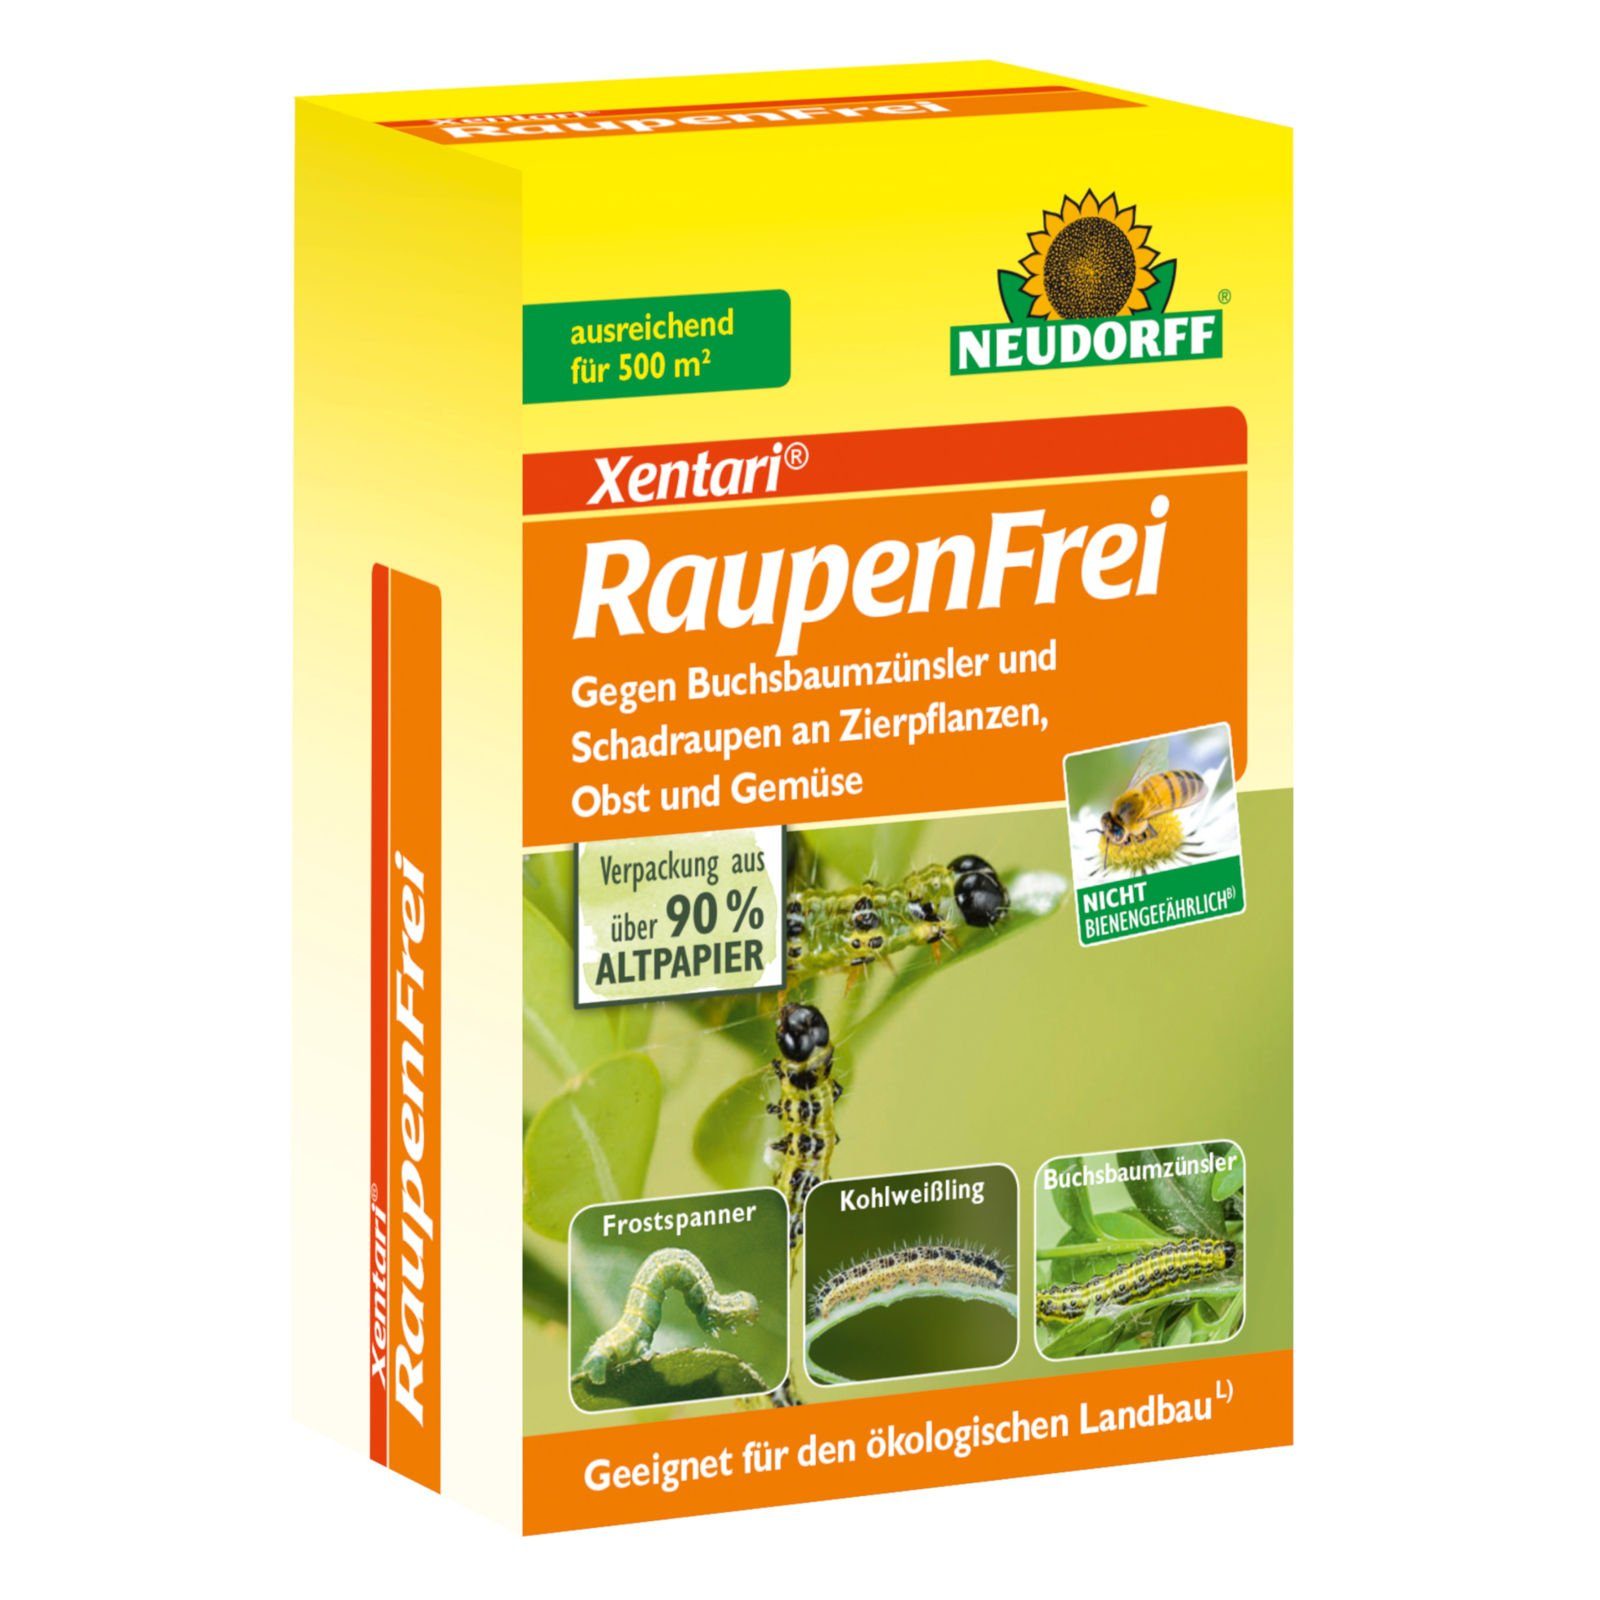 Neudorff Insektenvernichtungsmittel Raupenfrei - g 2x XenTari 25